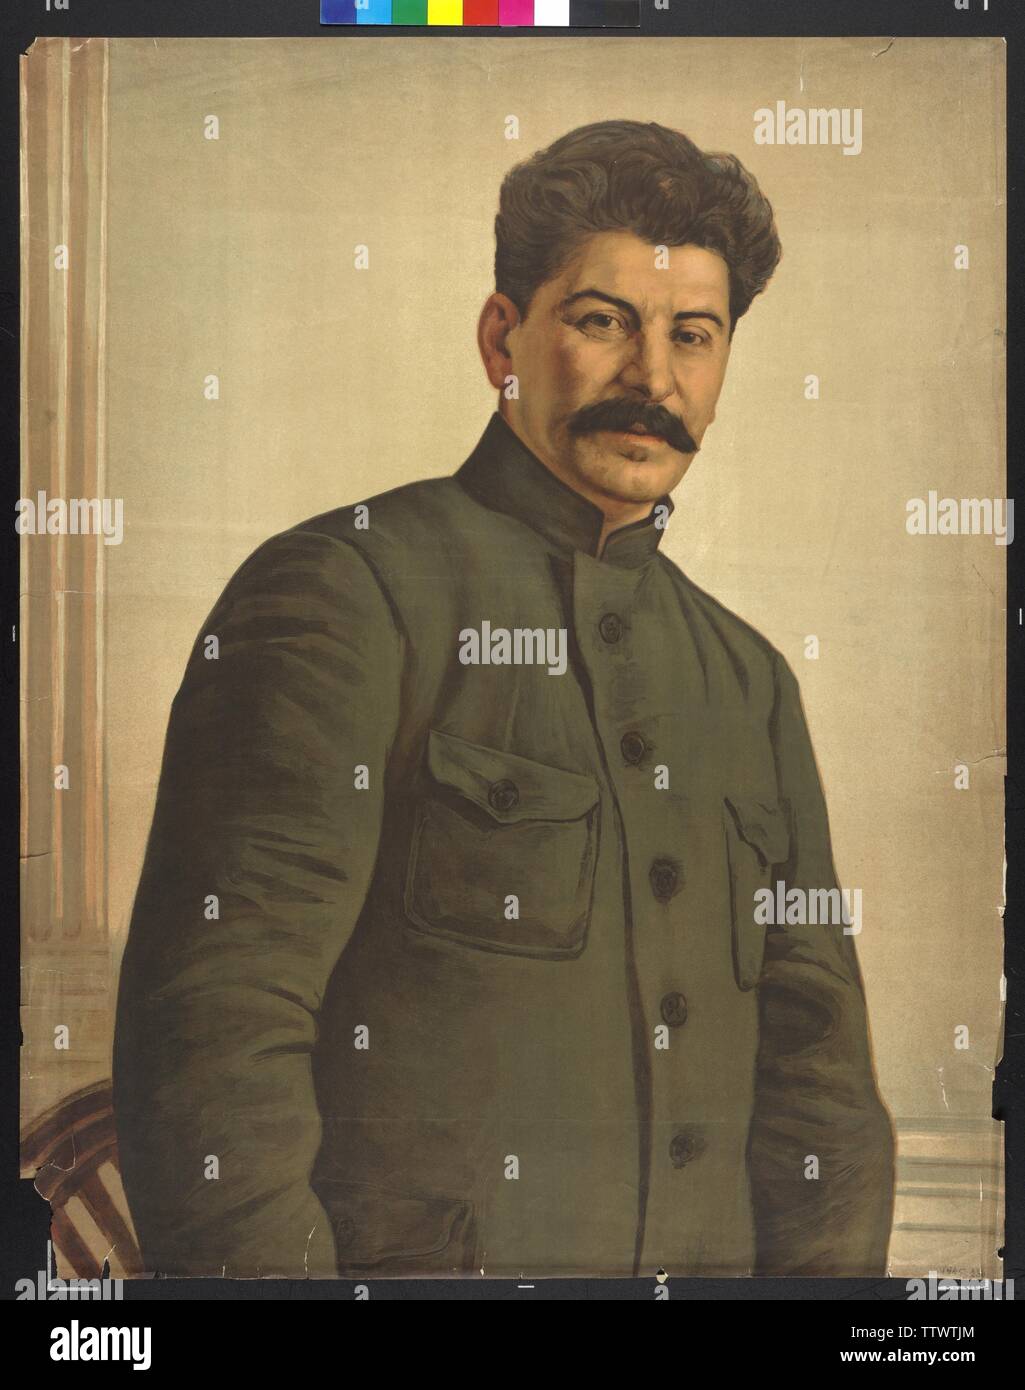 Stalin, Giuseppe Wissarionovitch, la stampa a colori sulla base di pittura, Additional-Rights-Clearance-Info-Not-Available Foto Stock